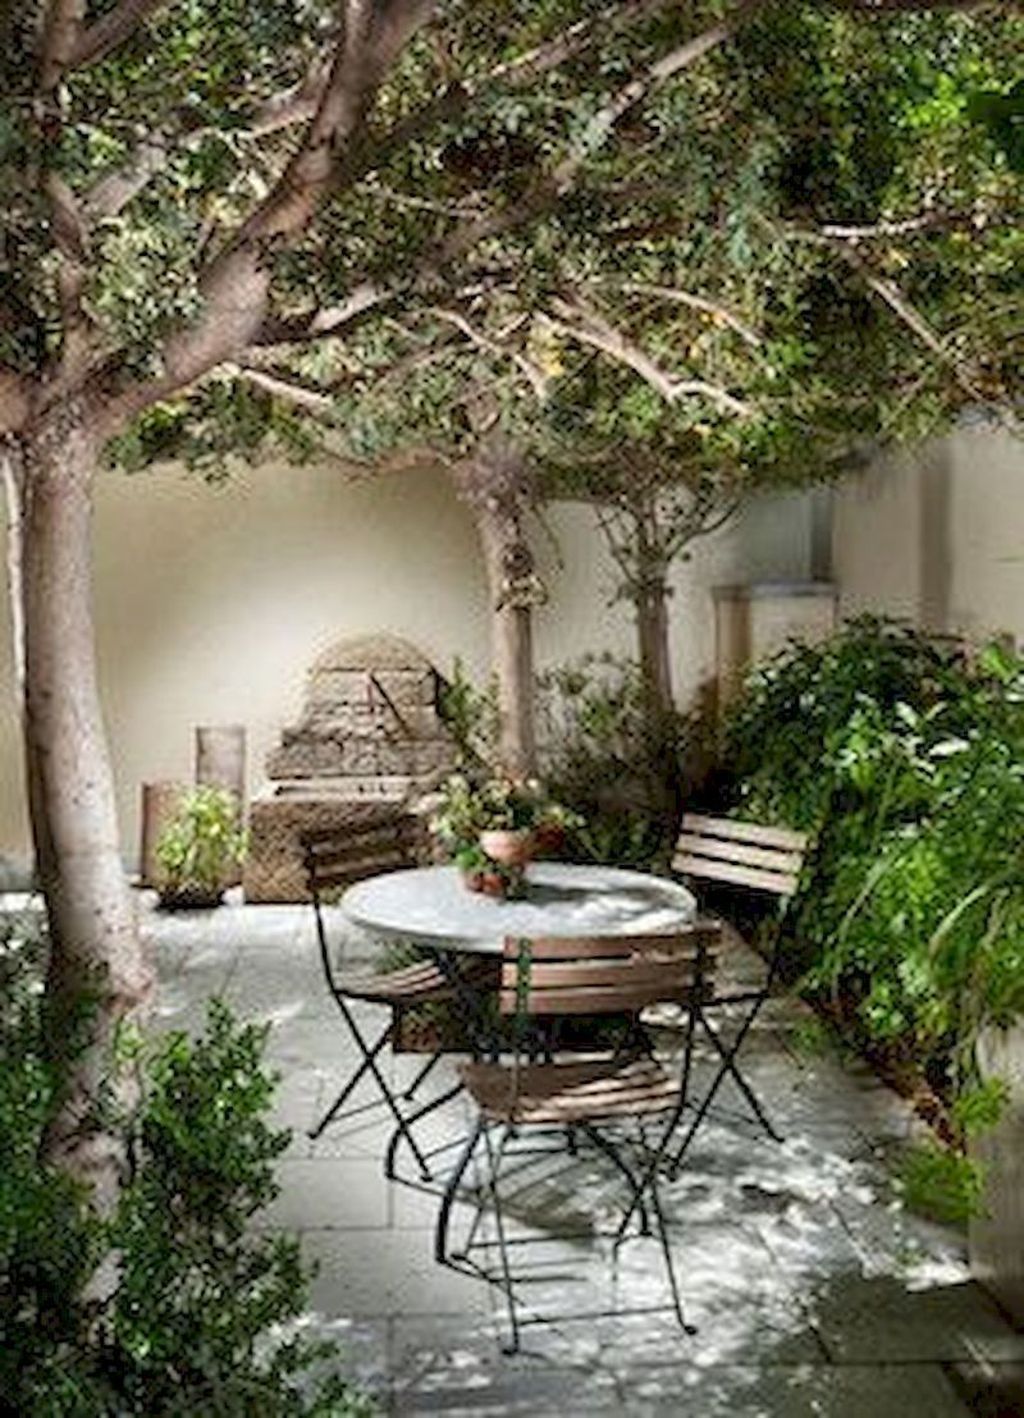 Courtyard Gardens Design